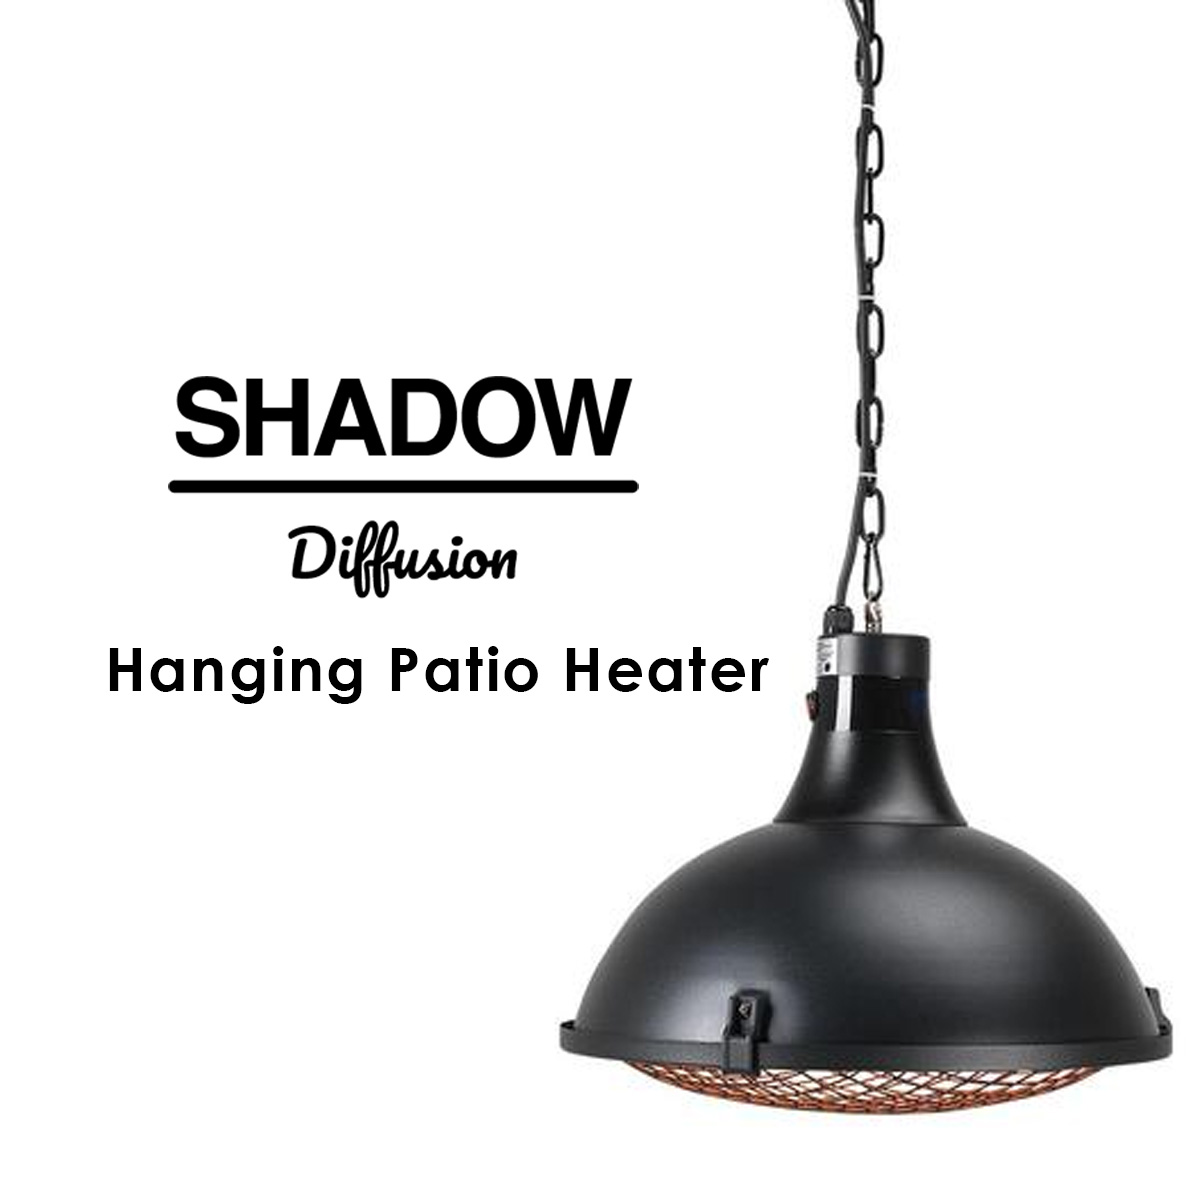 The Shadow Difusion Range - Hanging heater